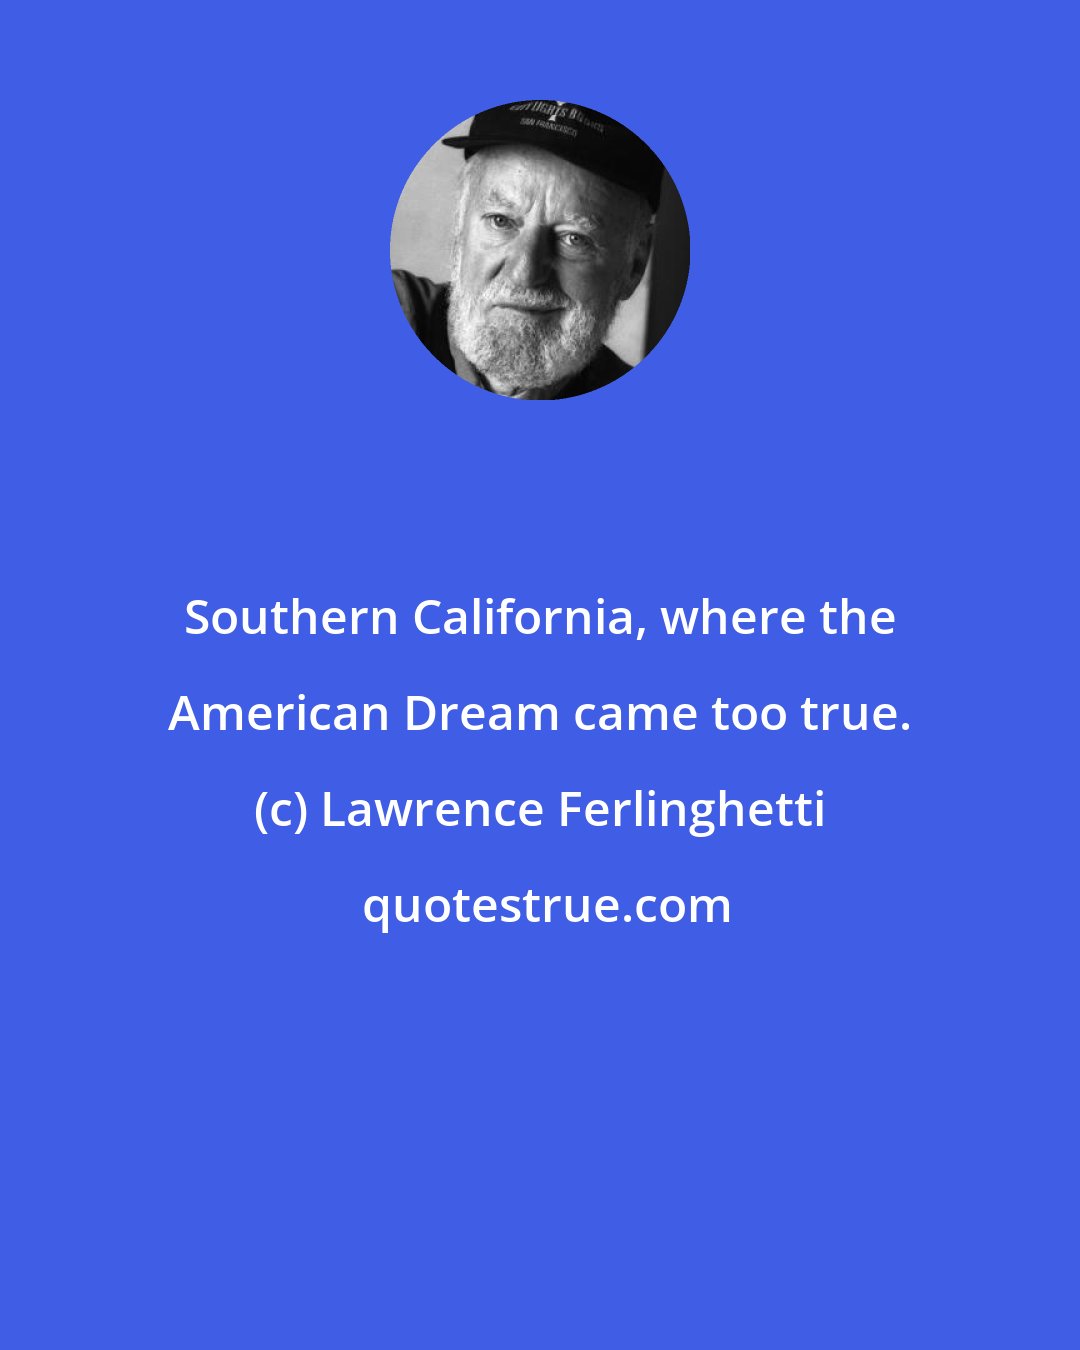 Lawrence Ferlinghetti: Southern California, where the American Dream came too true.